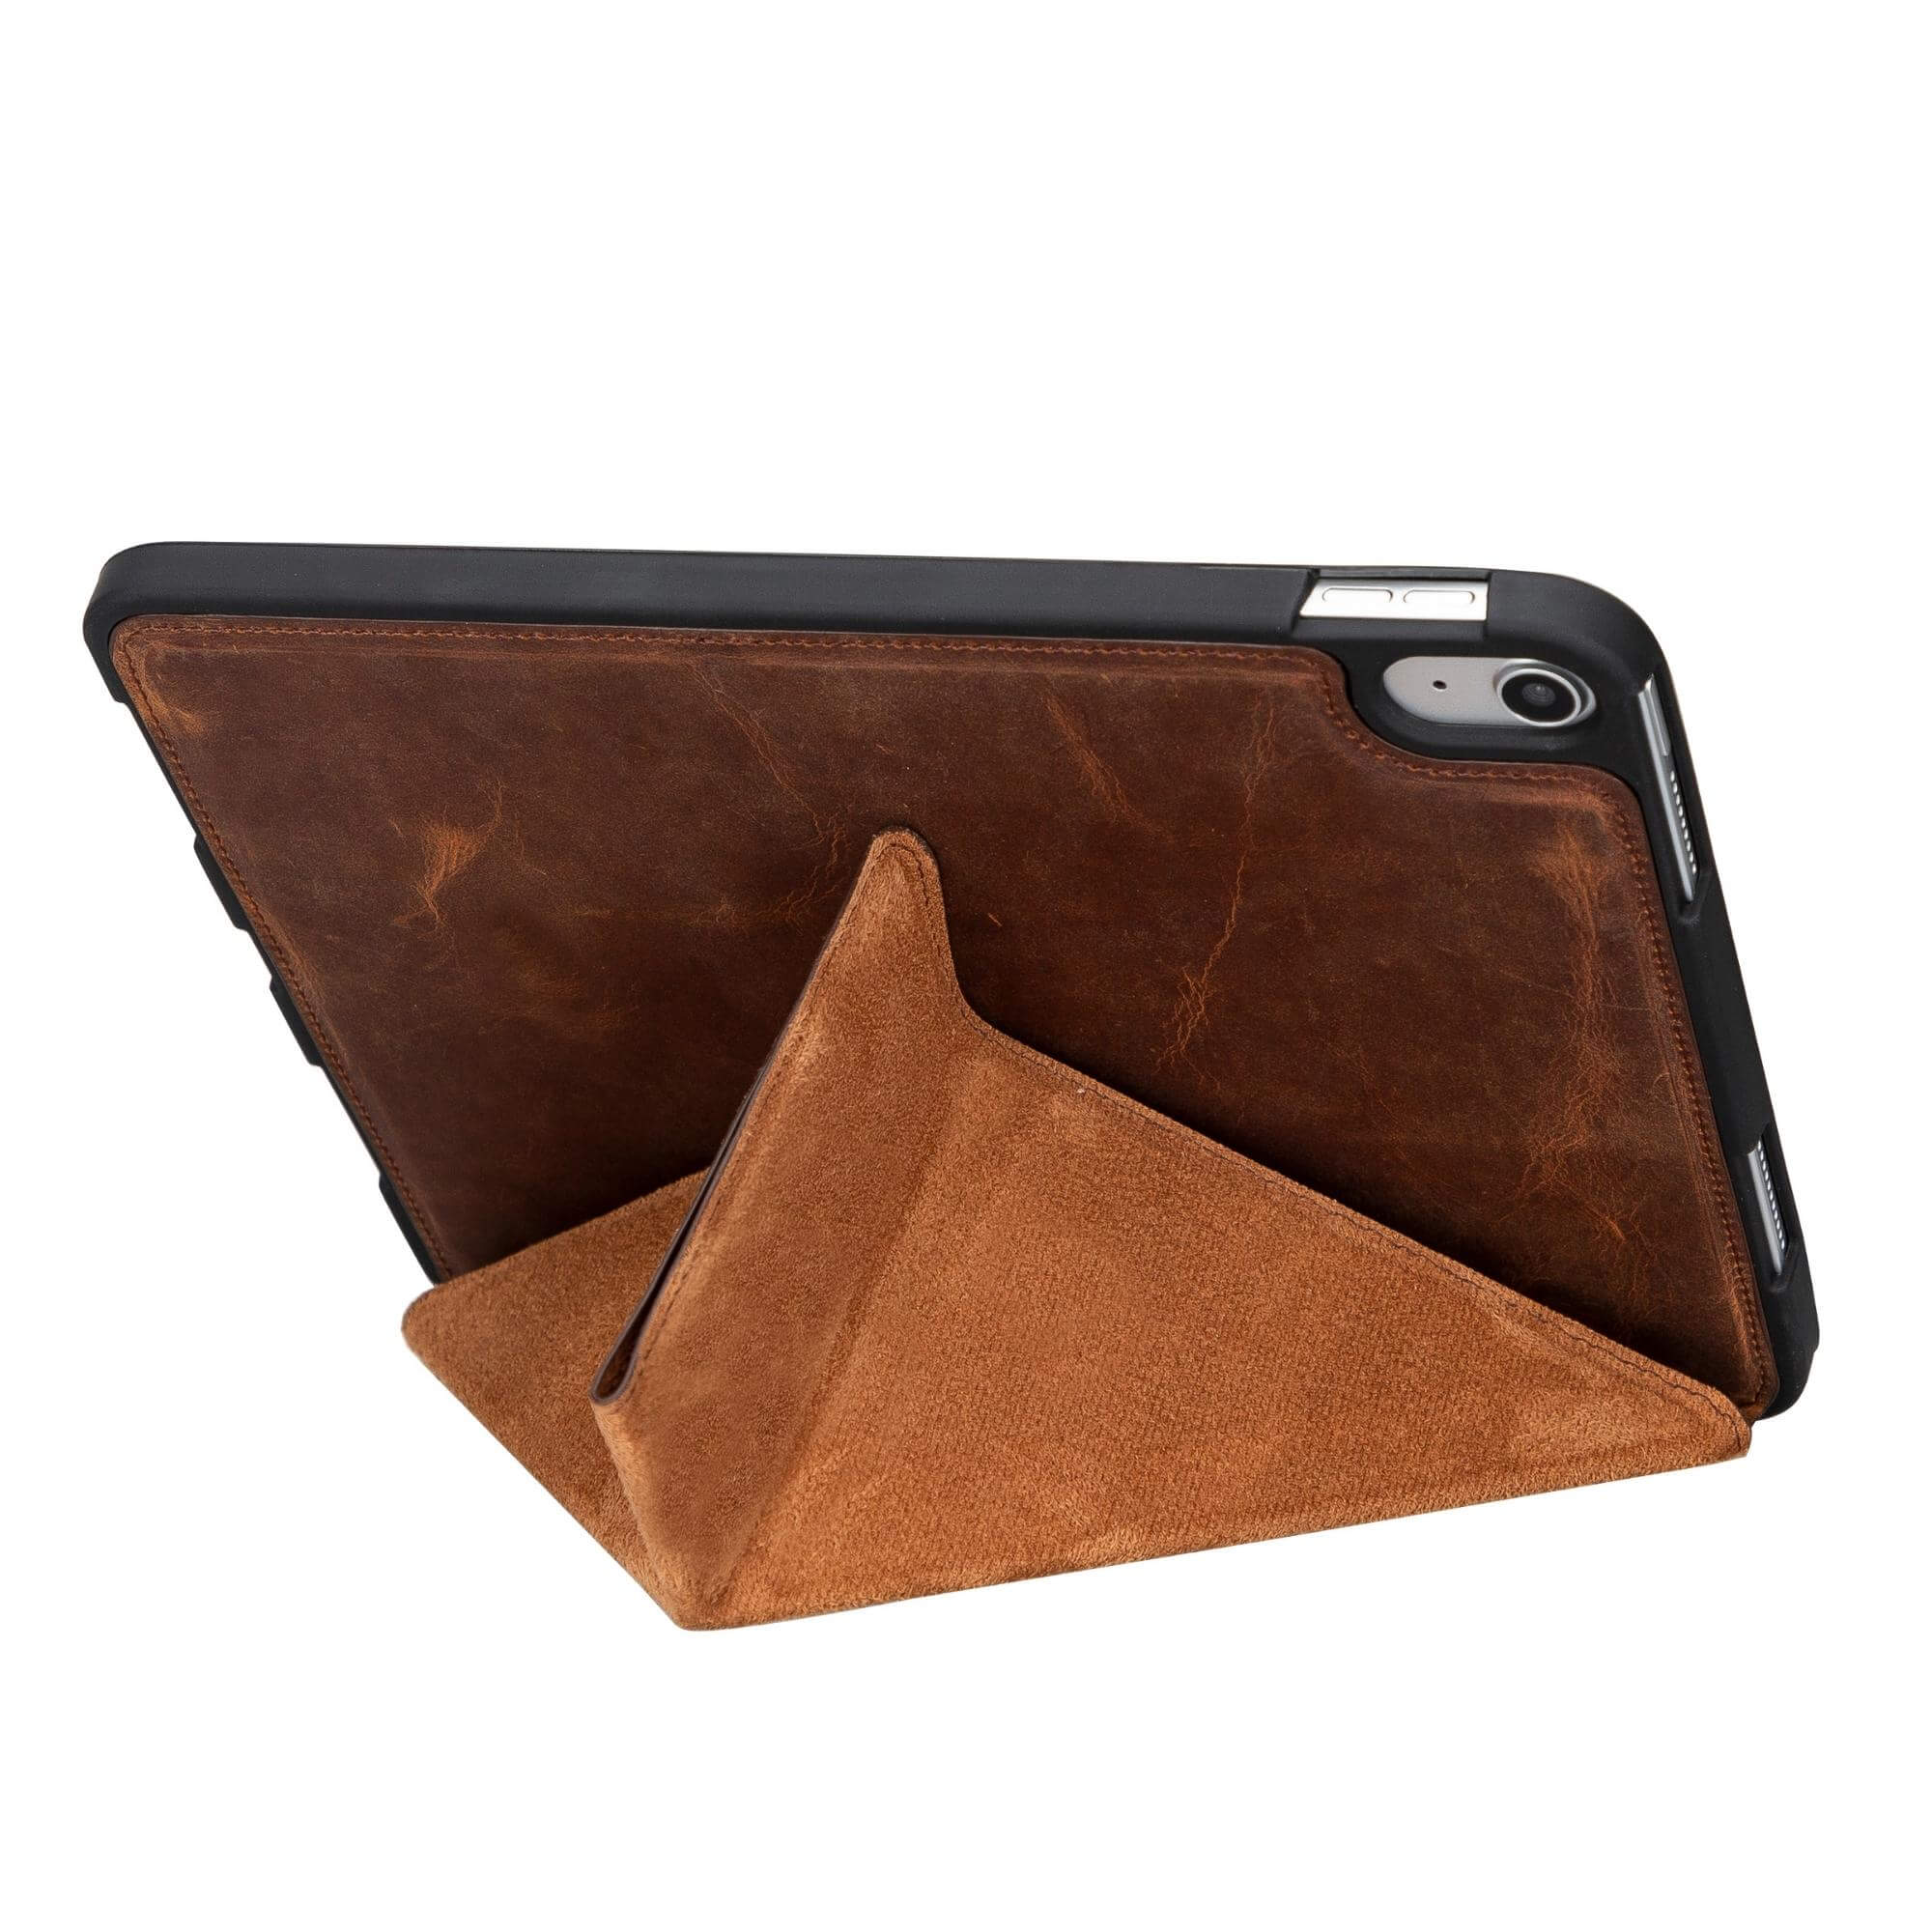 Gorilla Tech 2-in-1 Detachable Wallet Case iPhone XR Flip Cover Black